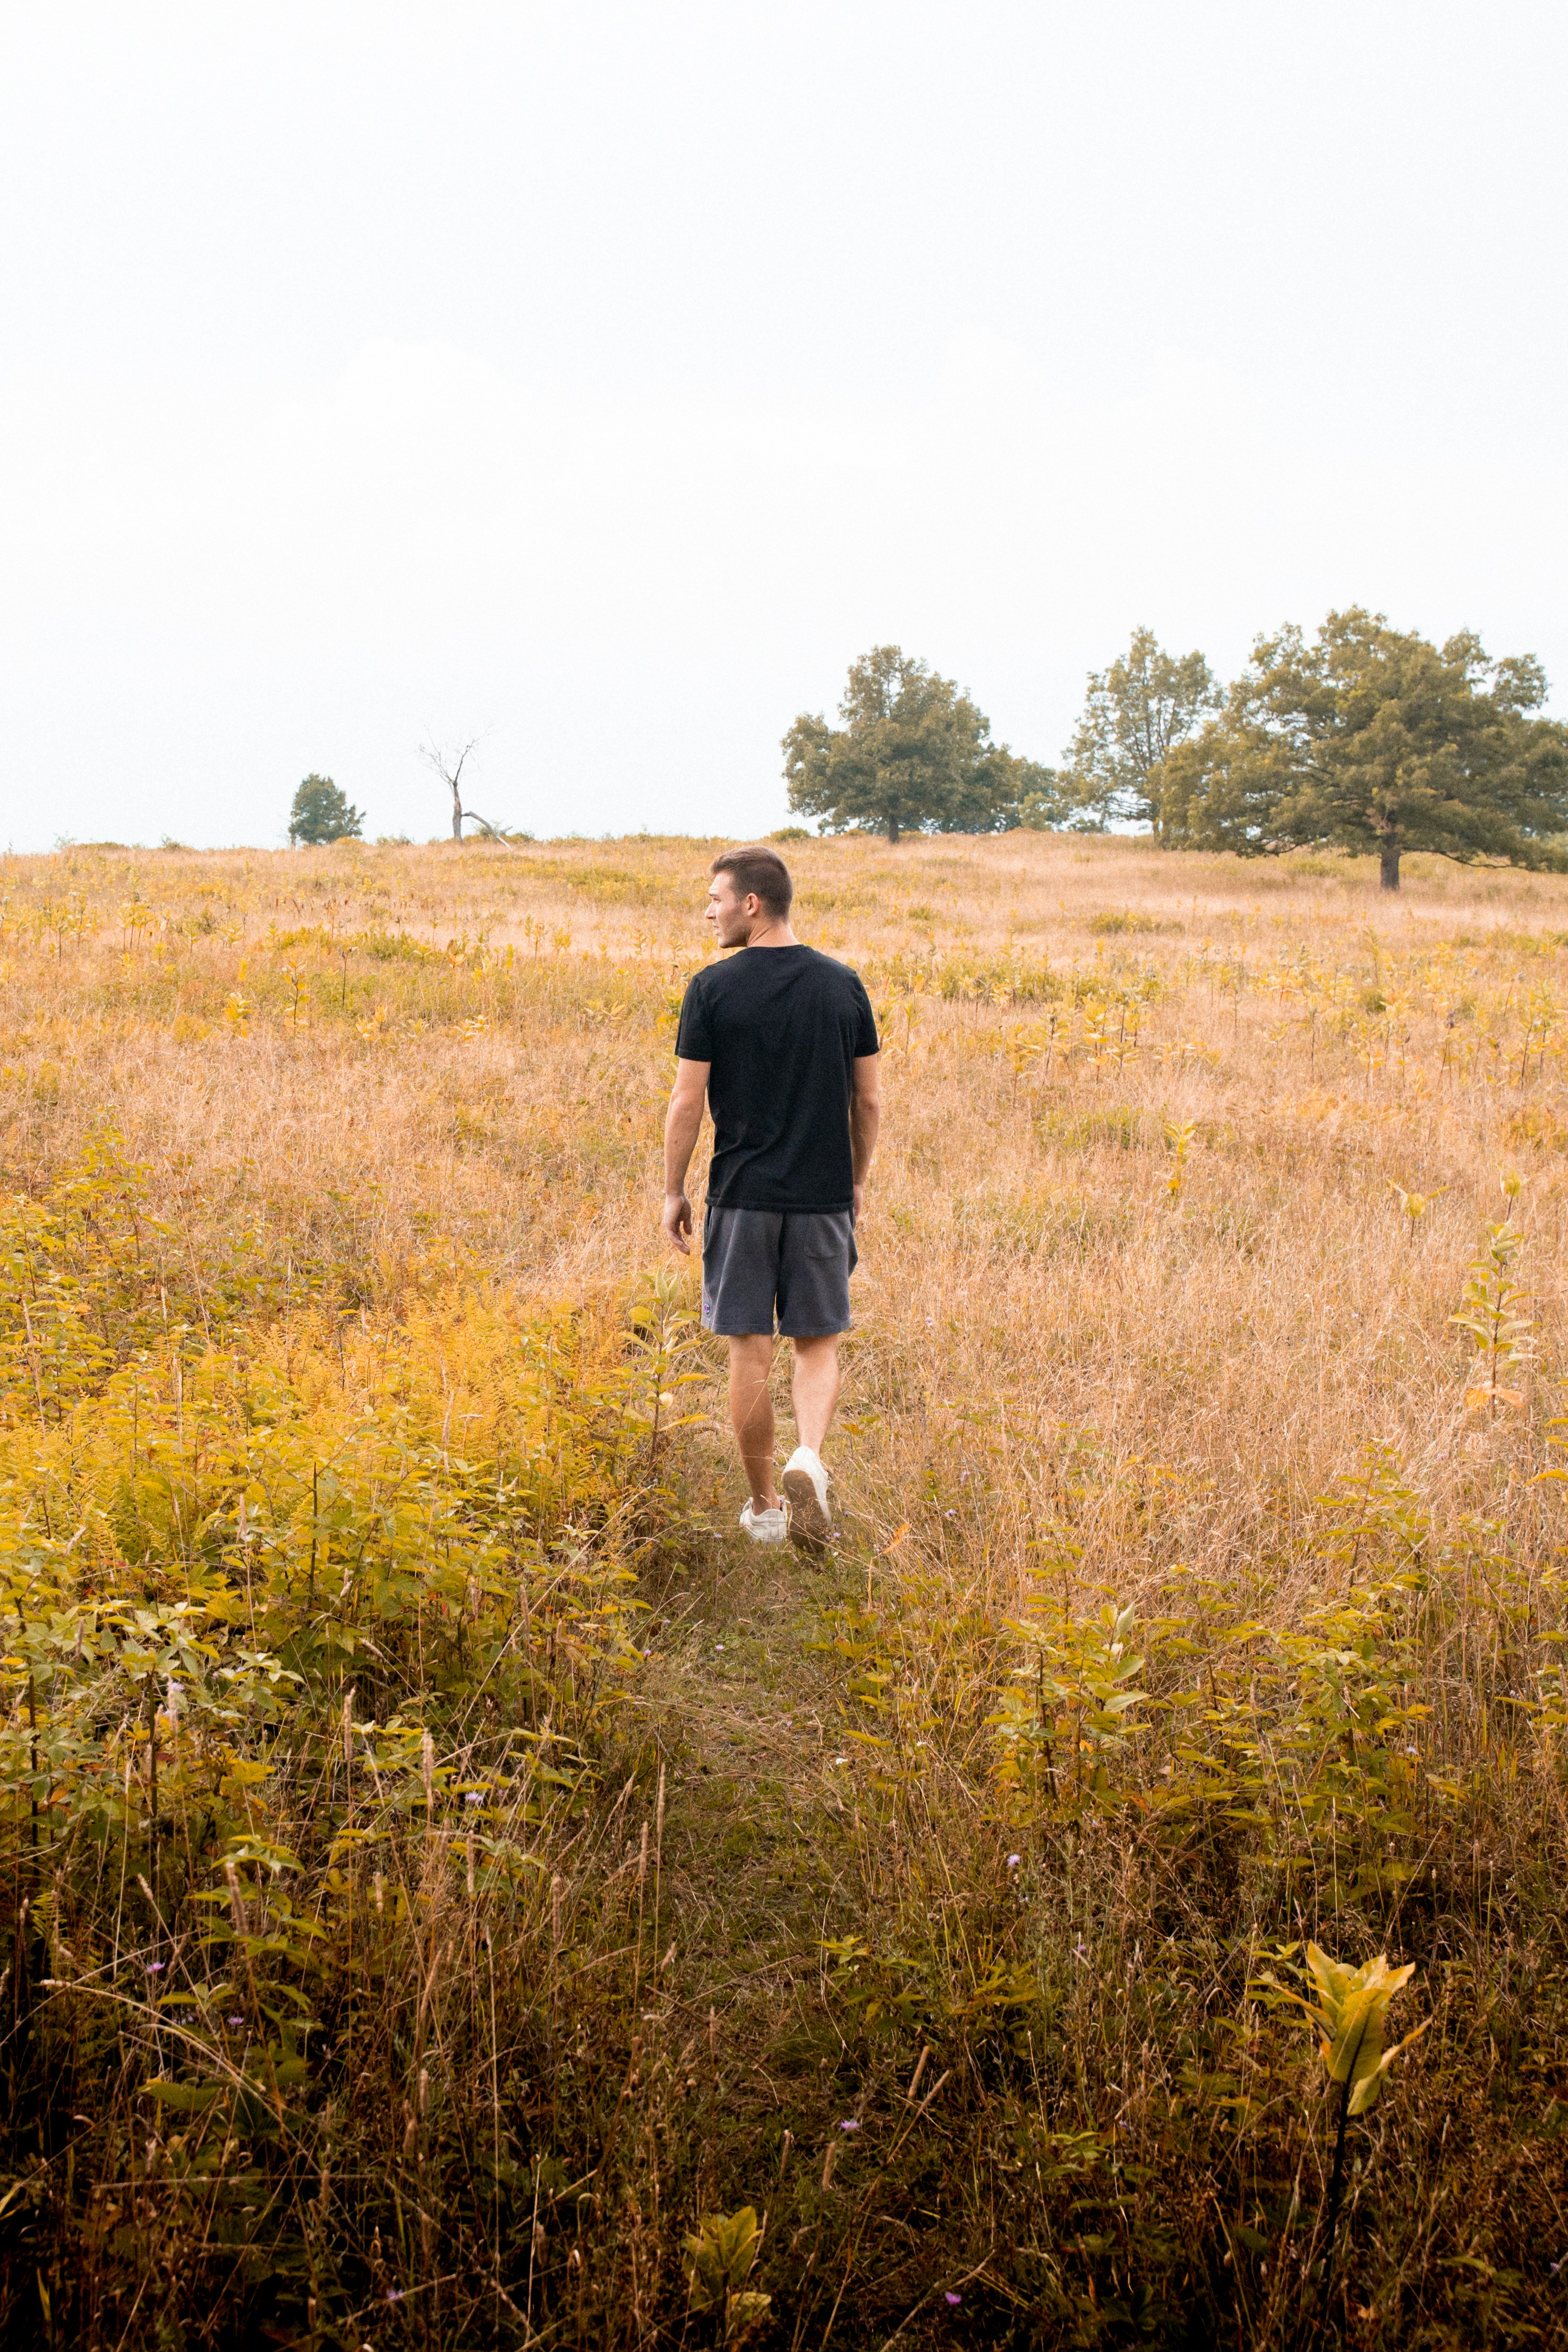 man in black shirt walking on brown grass field during daytime